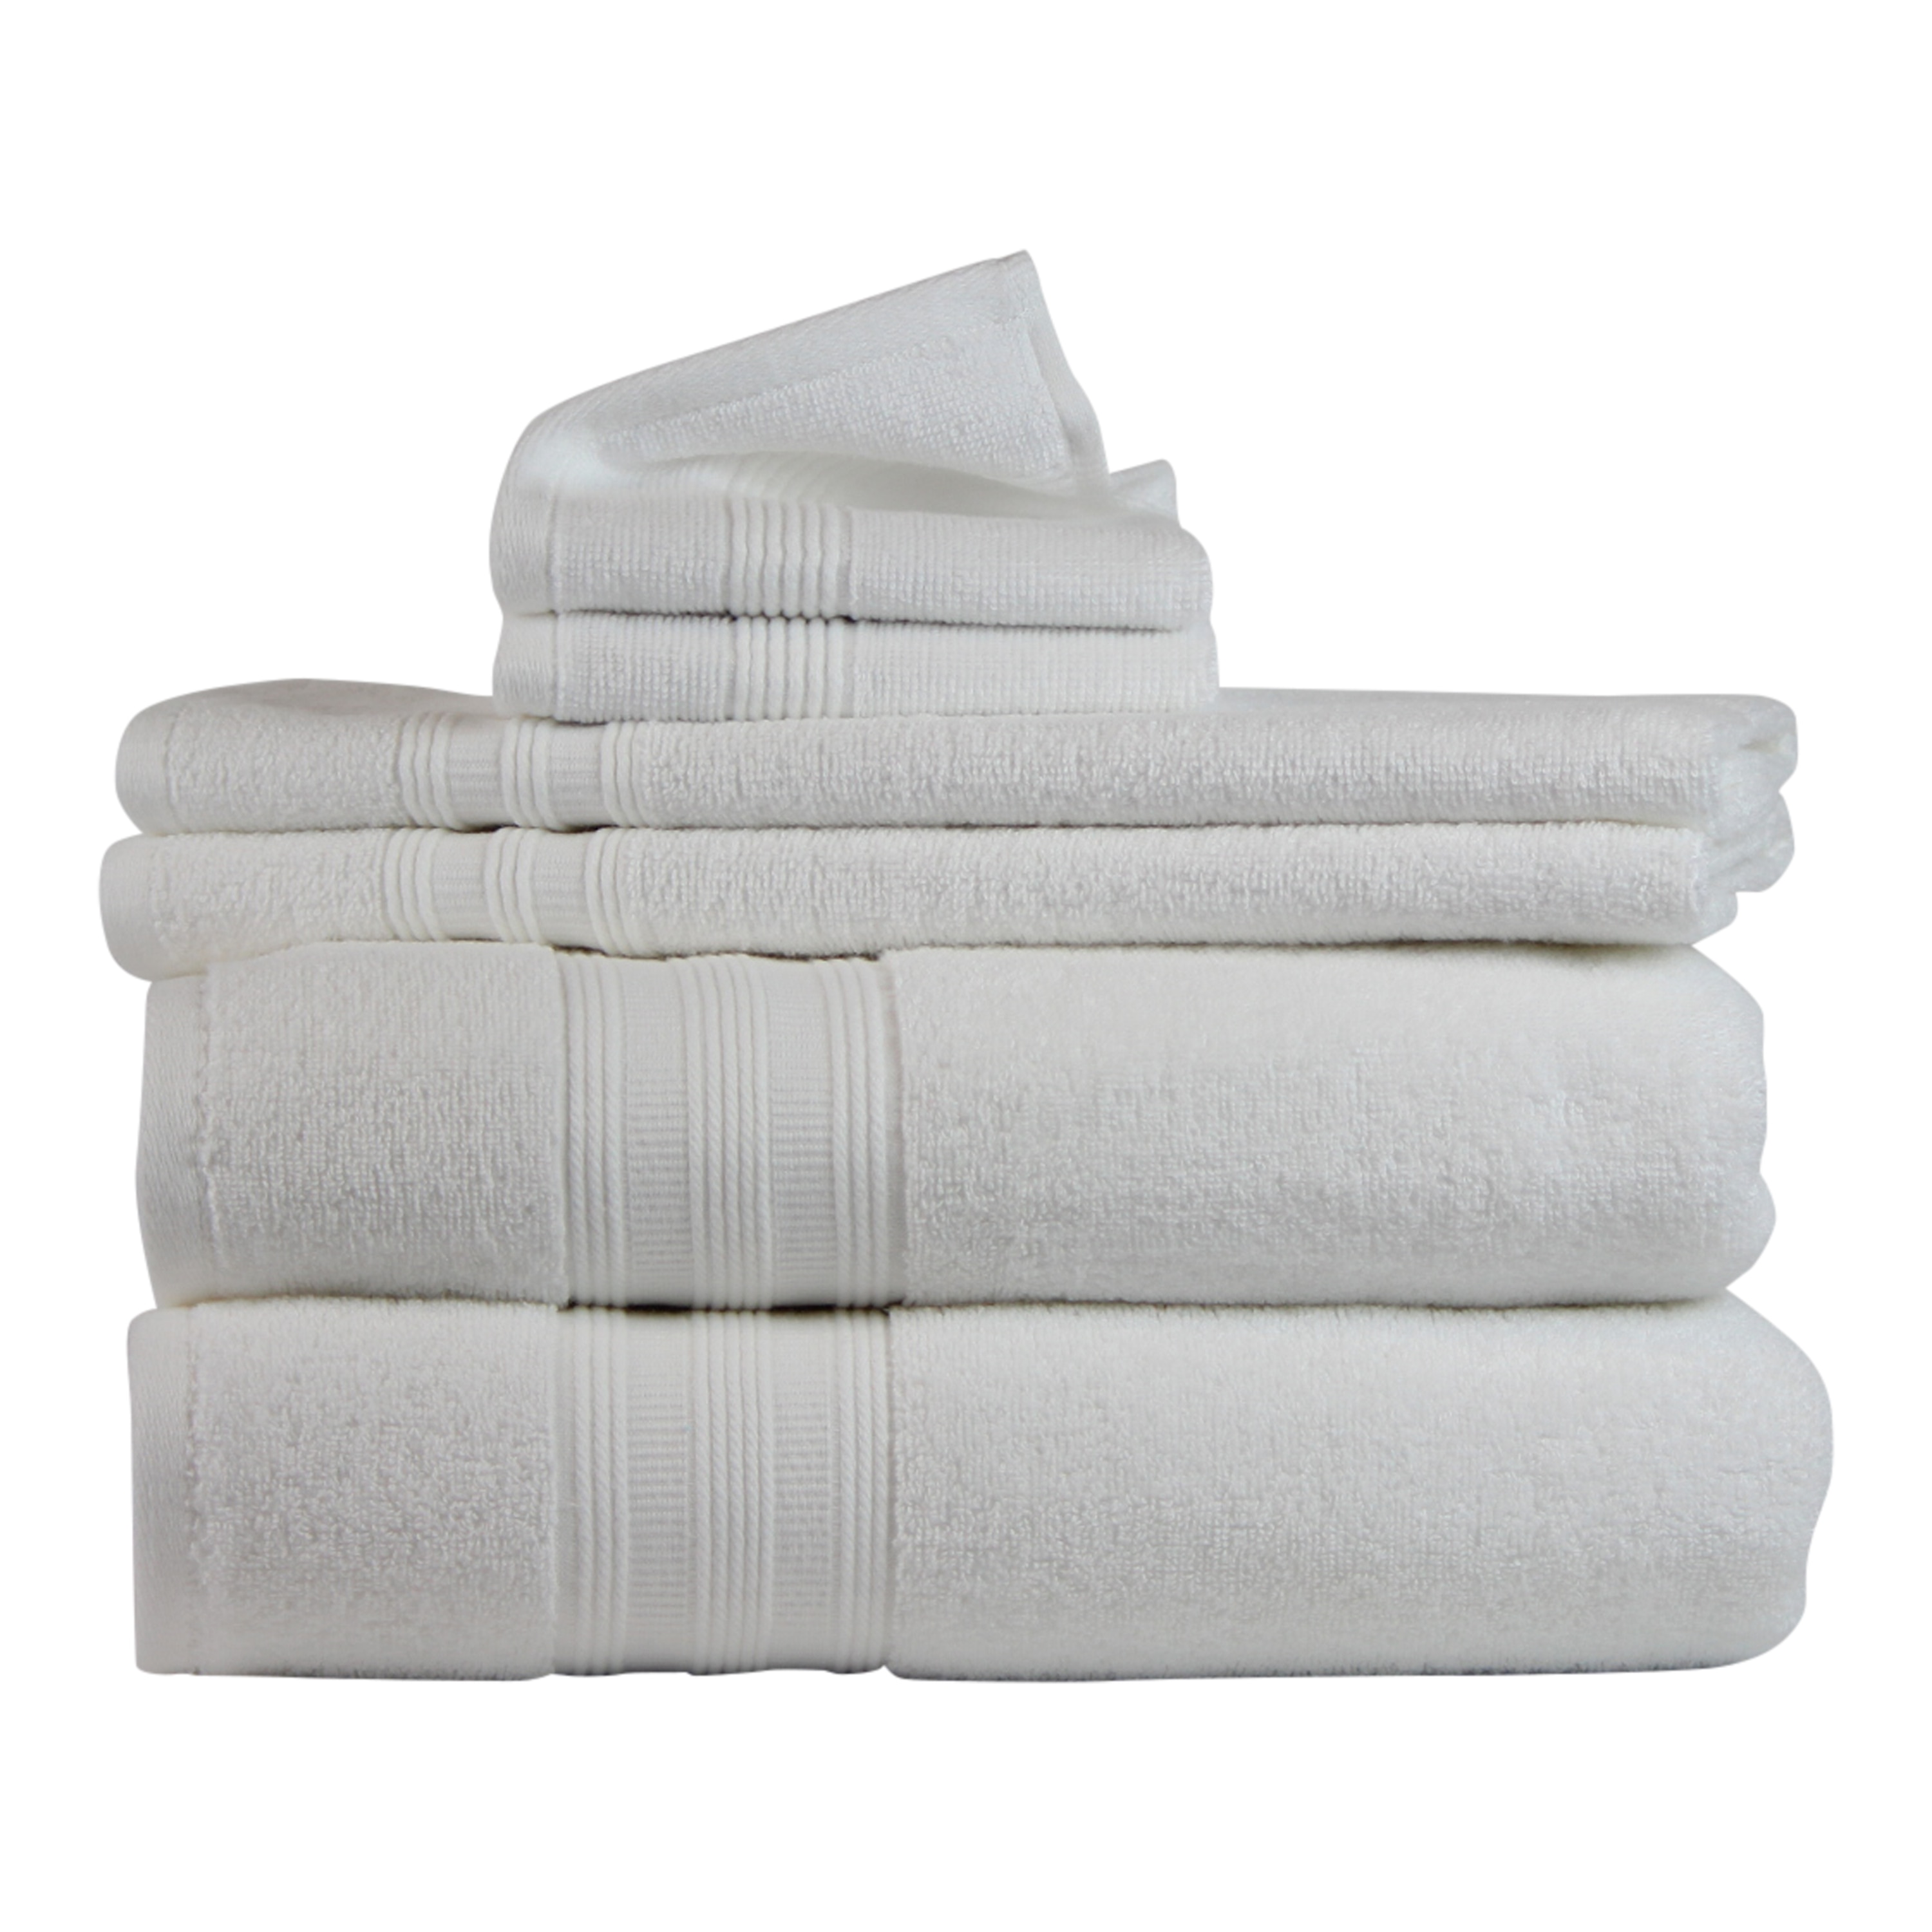 Freshee 4-Piece Bath Towel Set, Orange - Featuring Intellifresh  Antimicrobial Technology 